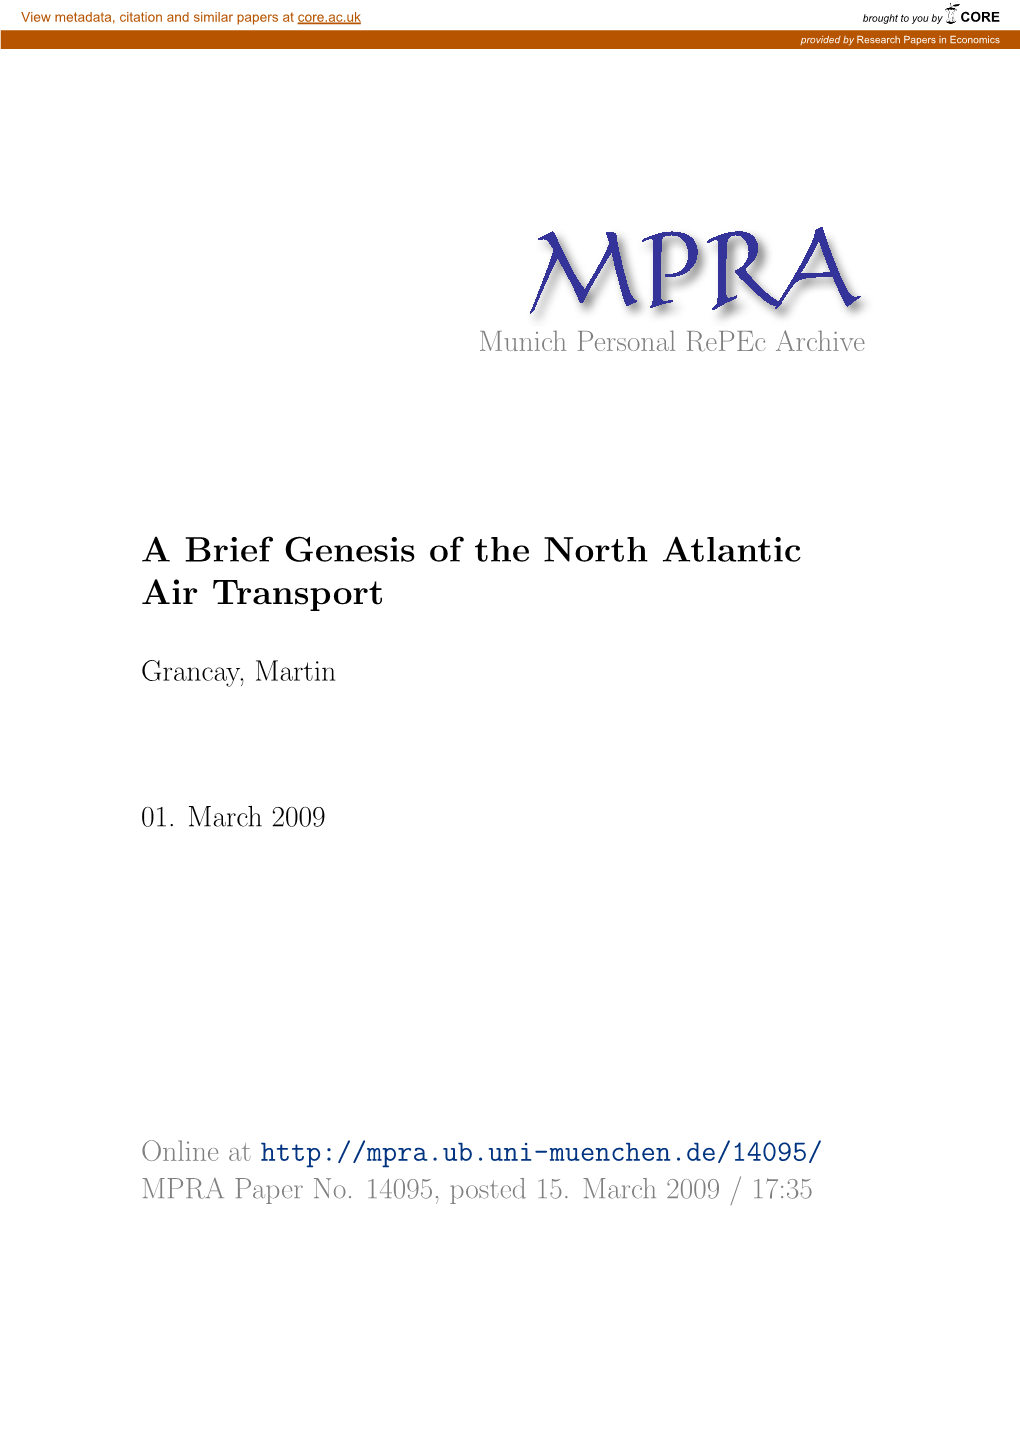 A Brief Genesis of the North Atlantic Air Transport